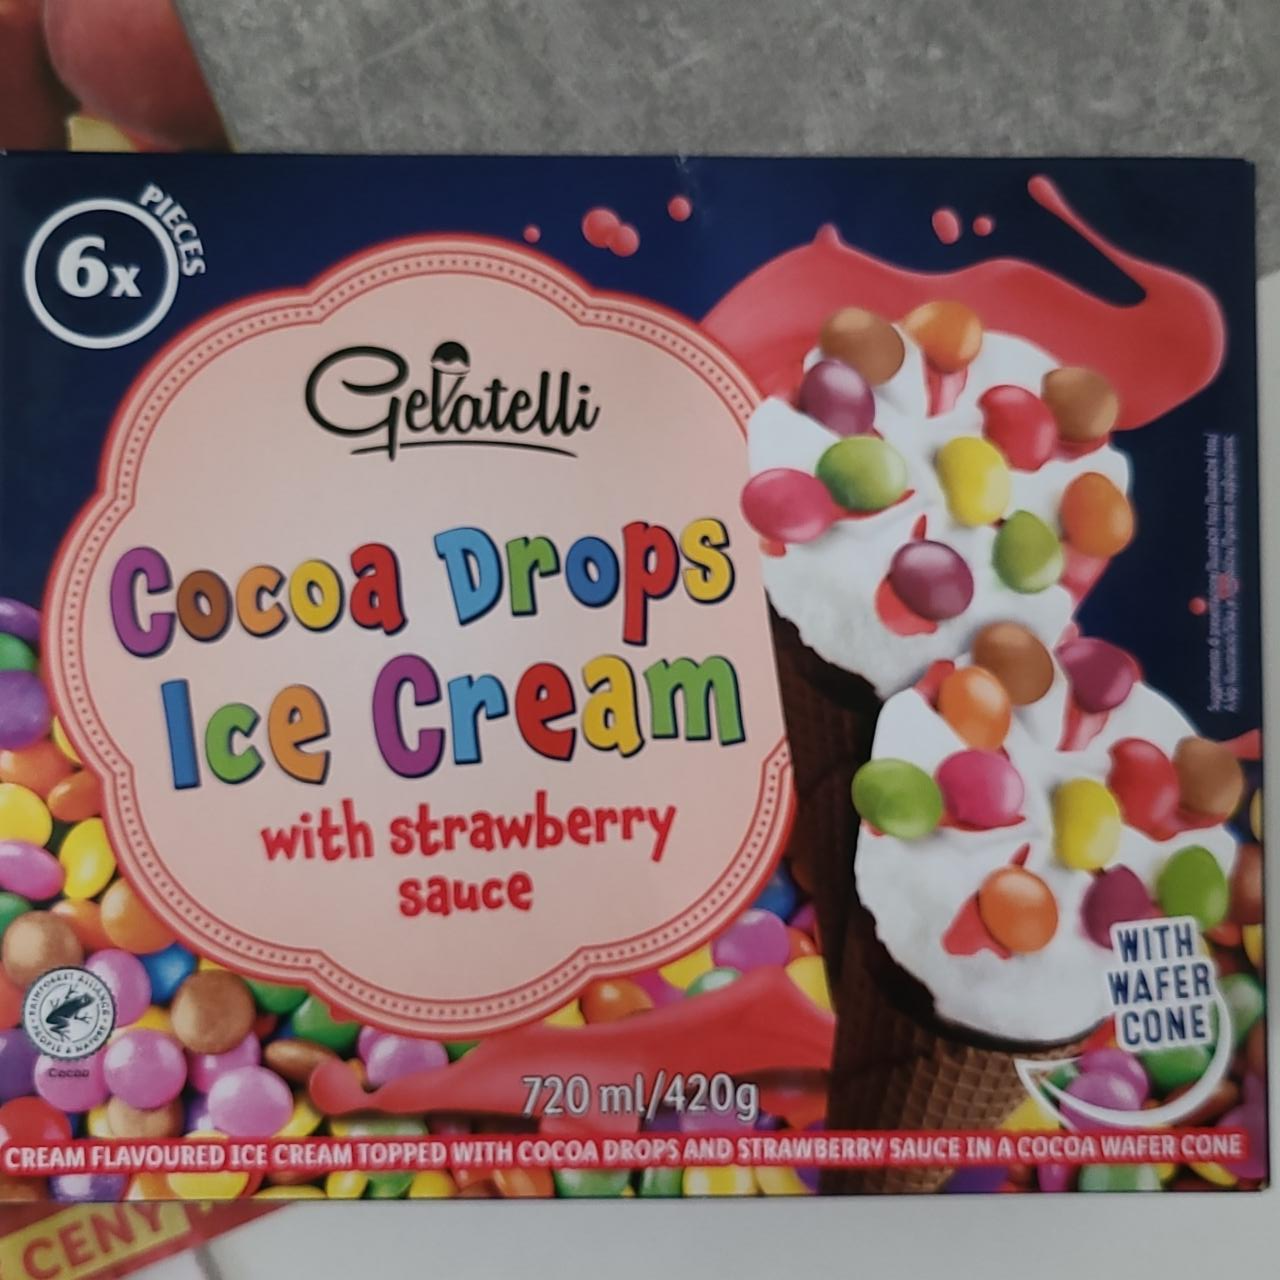 Fotografie - coca drops ice cream with strawberry sauce Gelatelli